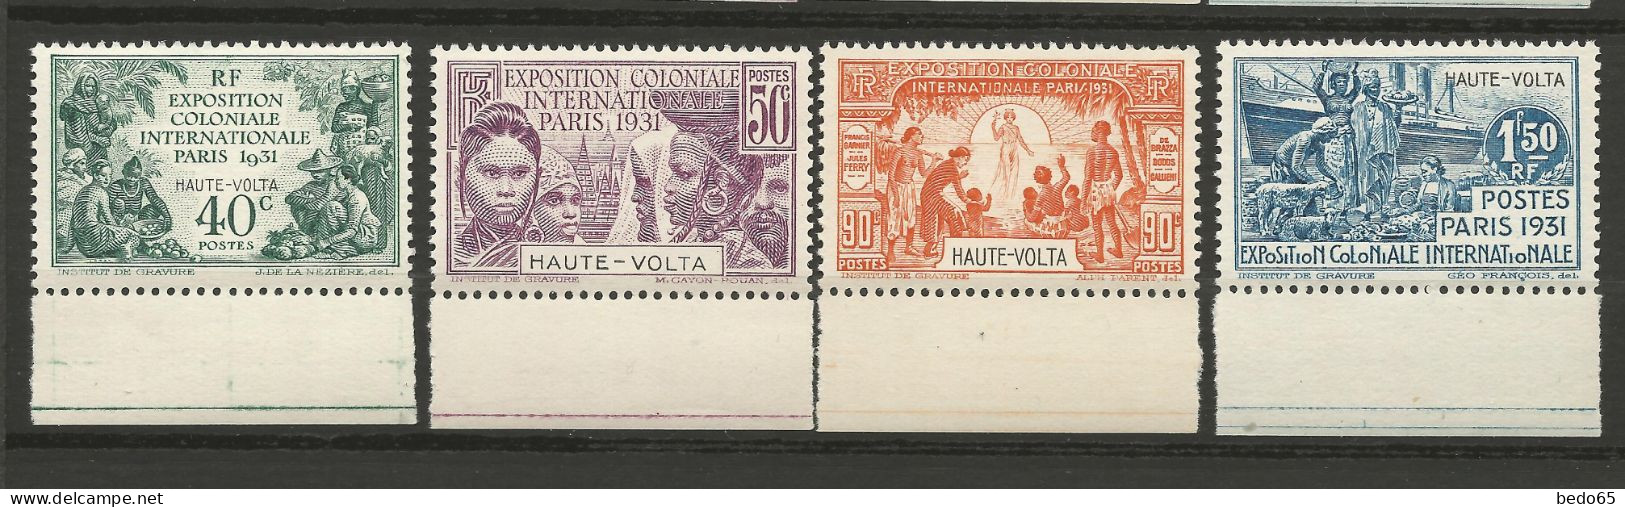 HAUTE-VOLTA EXPO COLONIALE 1931 Série Complète N° 66 à 69 BDF NEUF** LUXE SANS CHARNIERE / Hingeless  / MNH - Unused Stamps